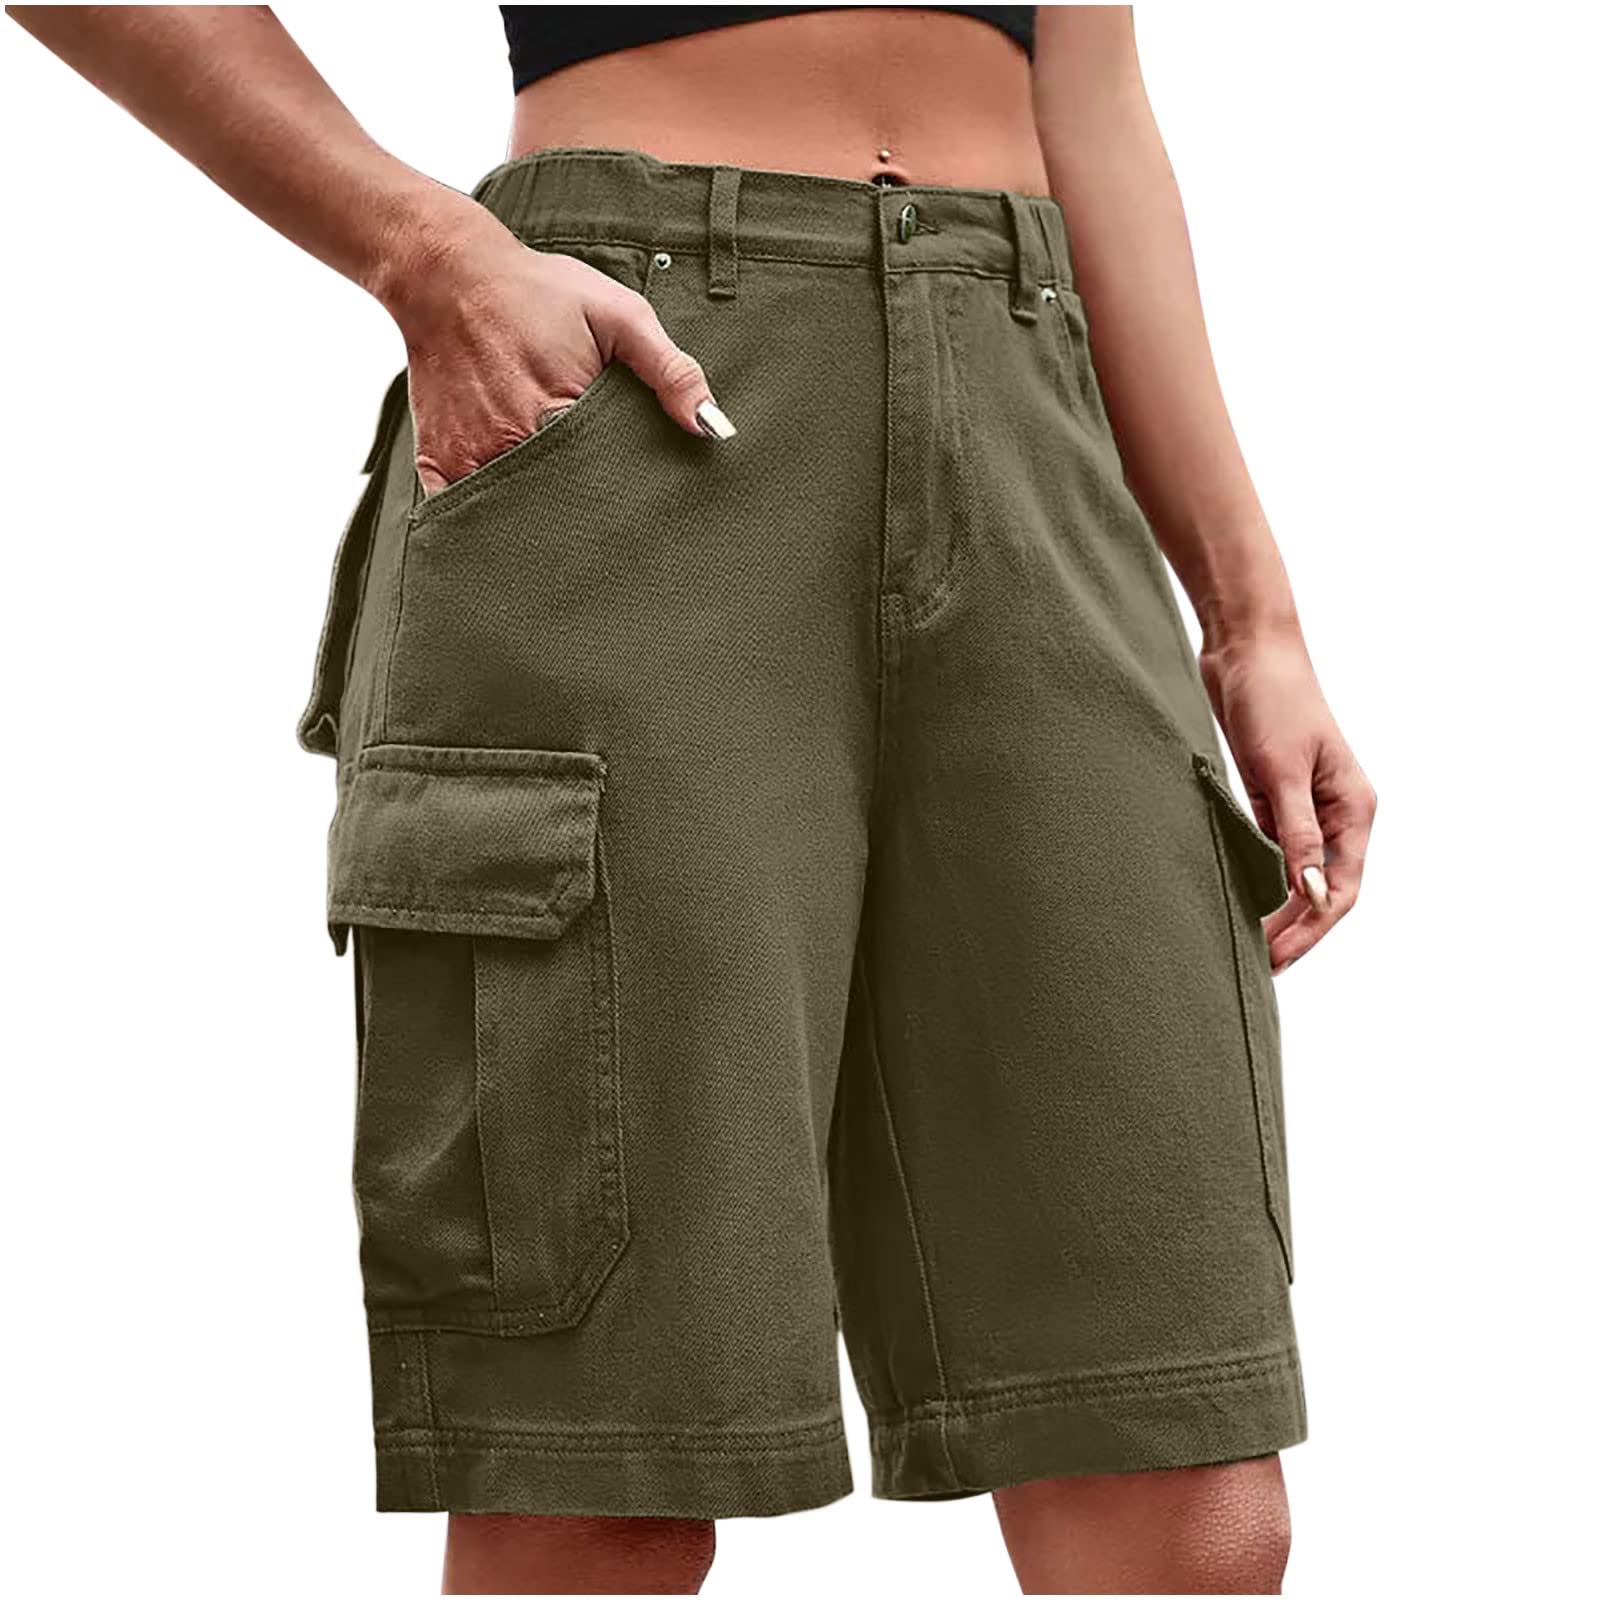 Cargo Shorts for Women with Pockets Scrunch Booty Short Leggings